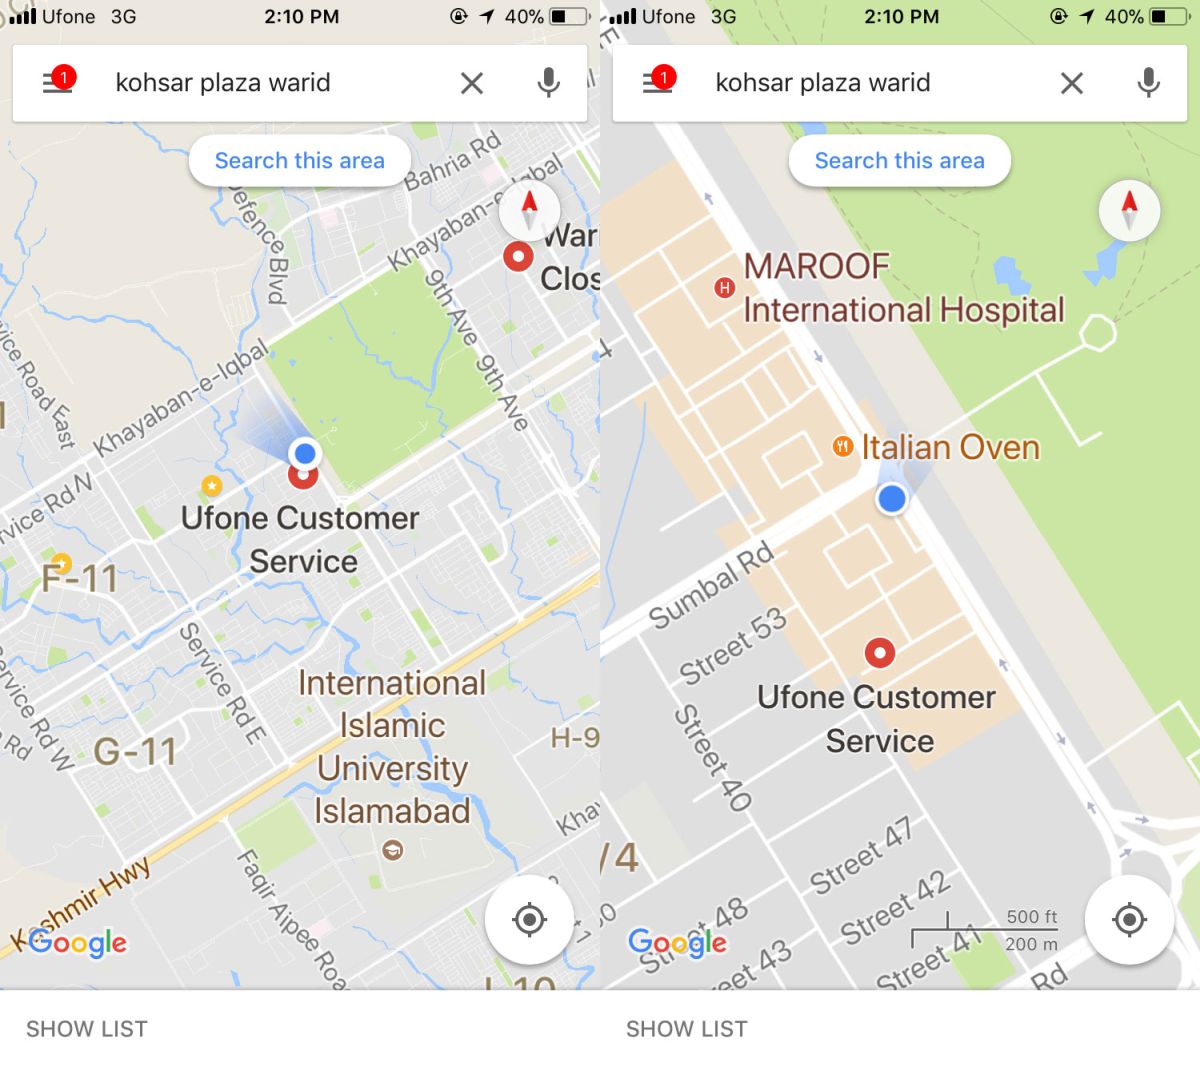 set google maps location for ip address